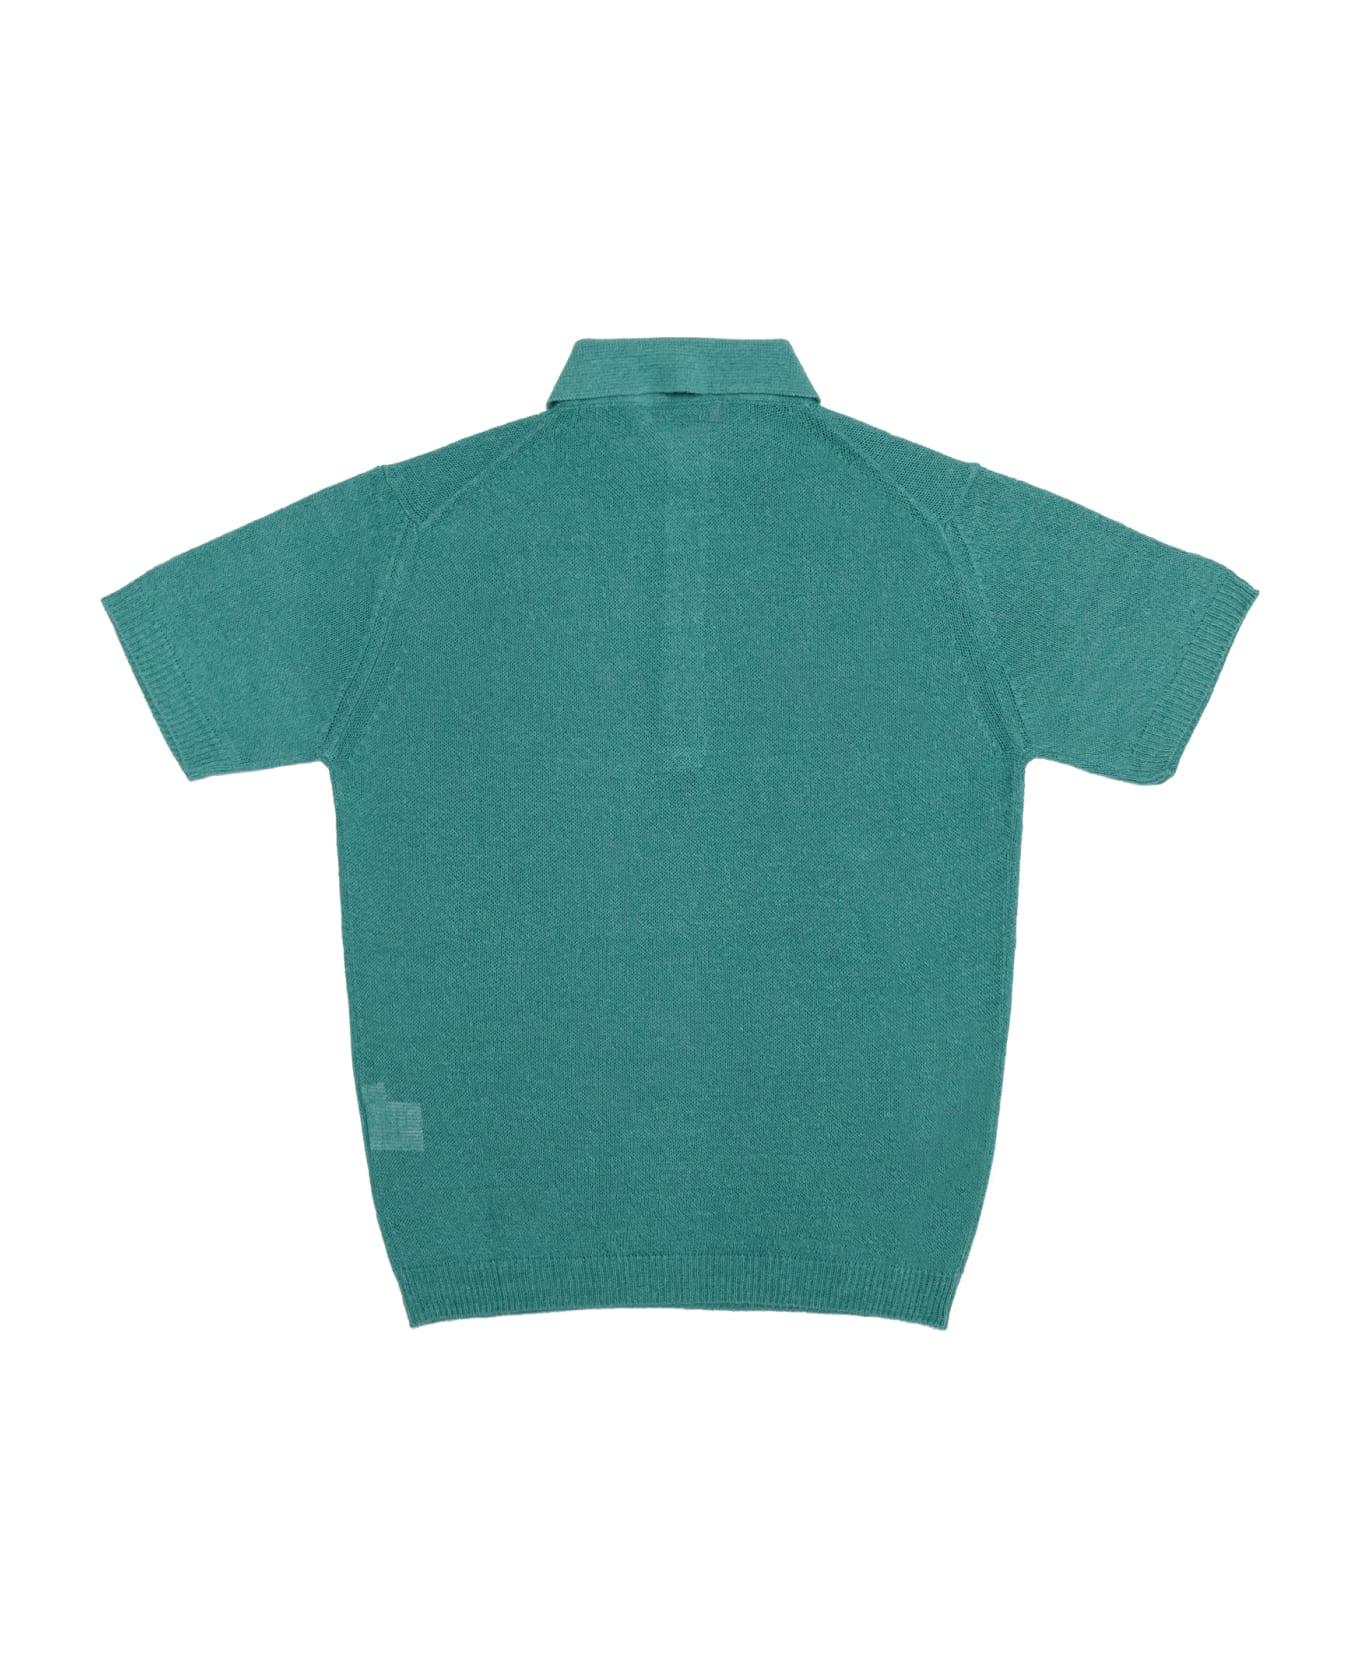 Filippo De Laurentiis Polo Shirt - Turquoise